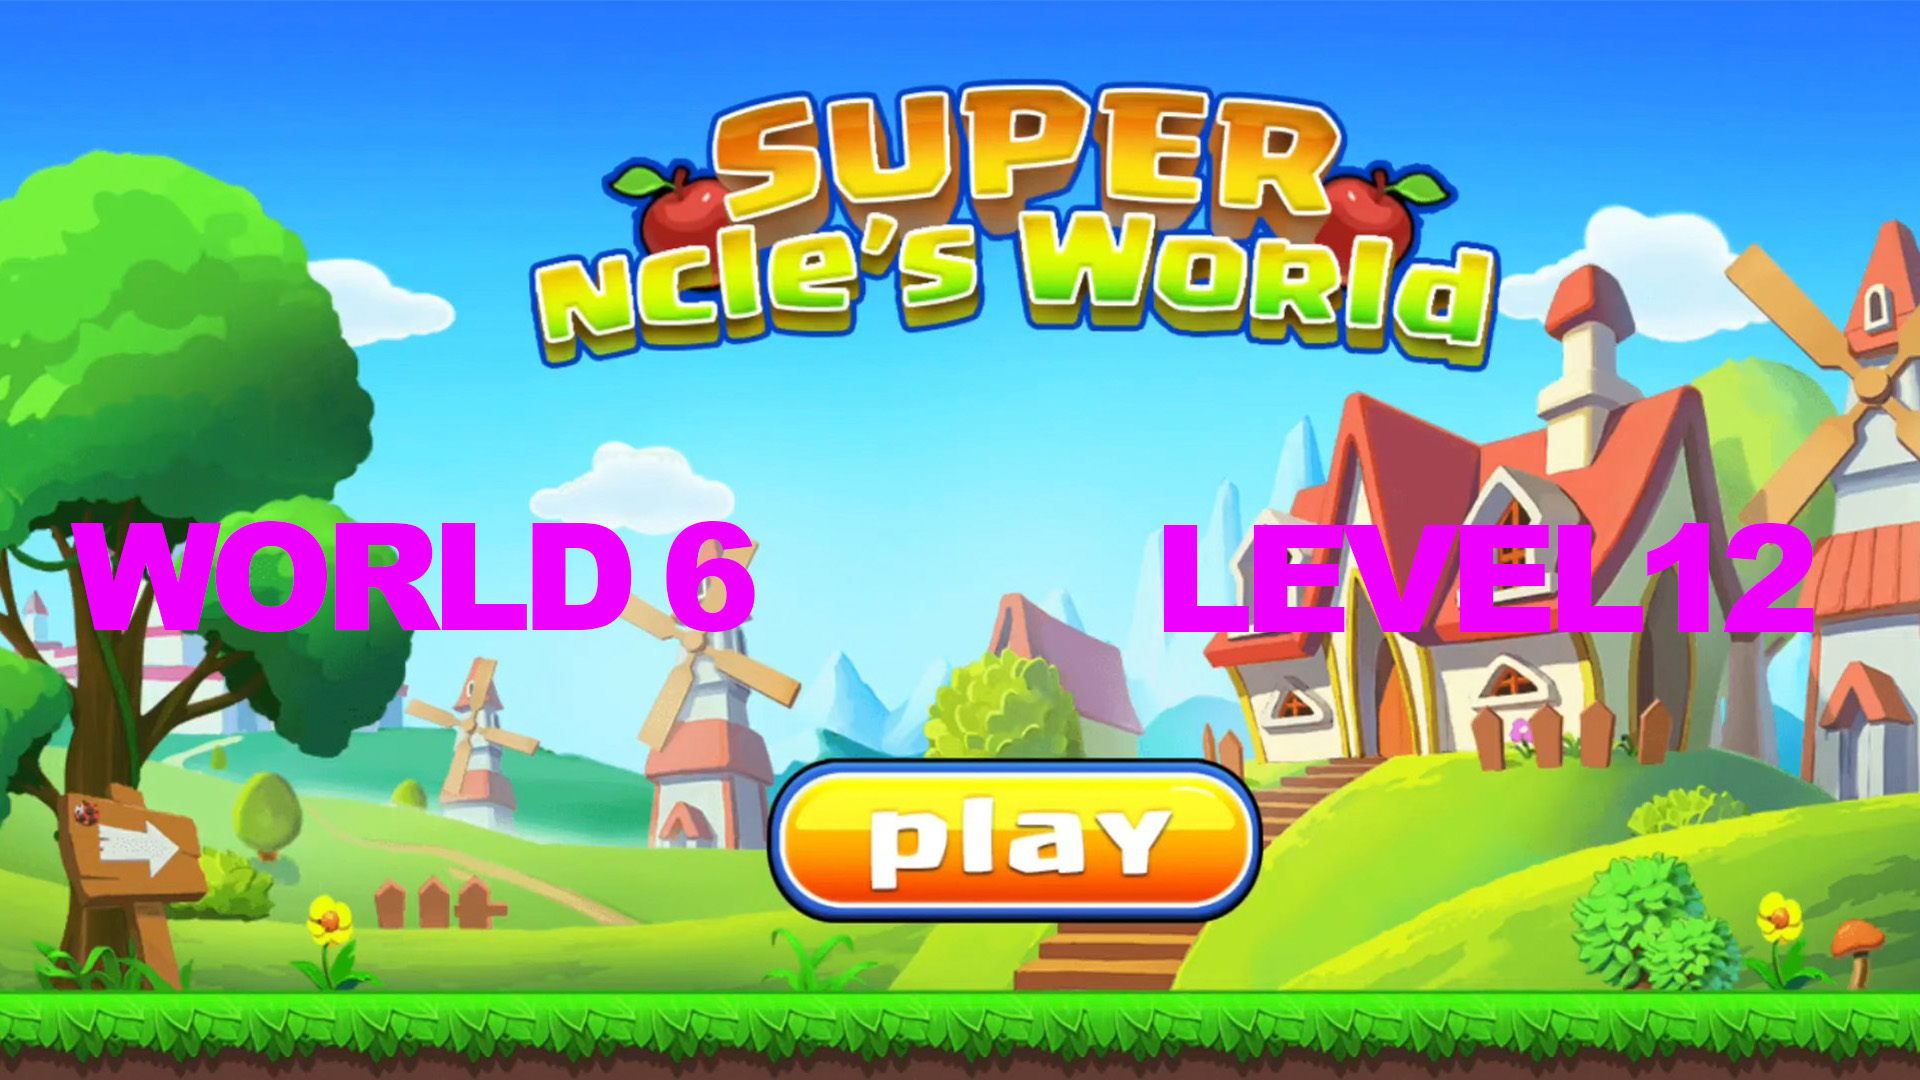 Super ncle's  World 6. Level 12.